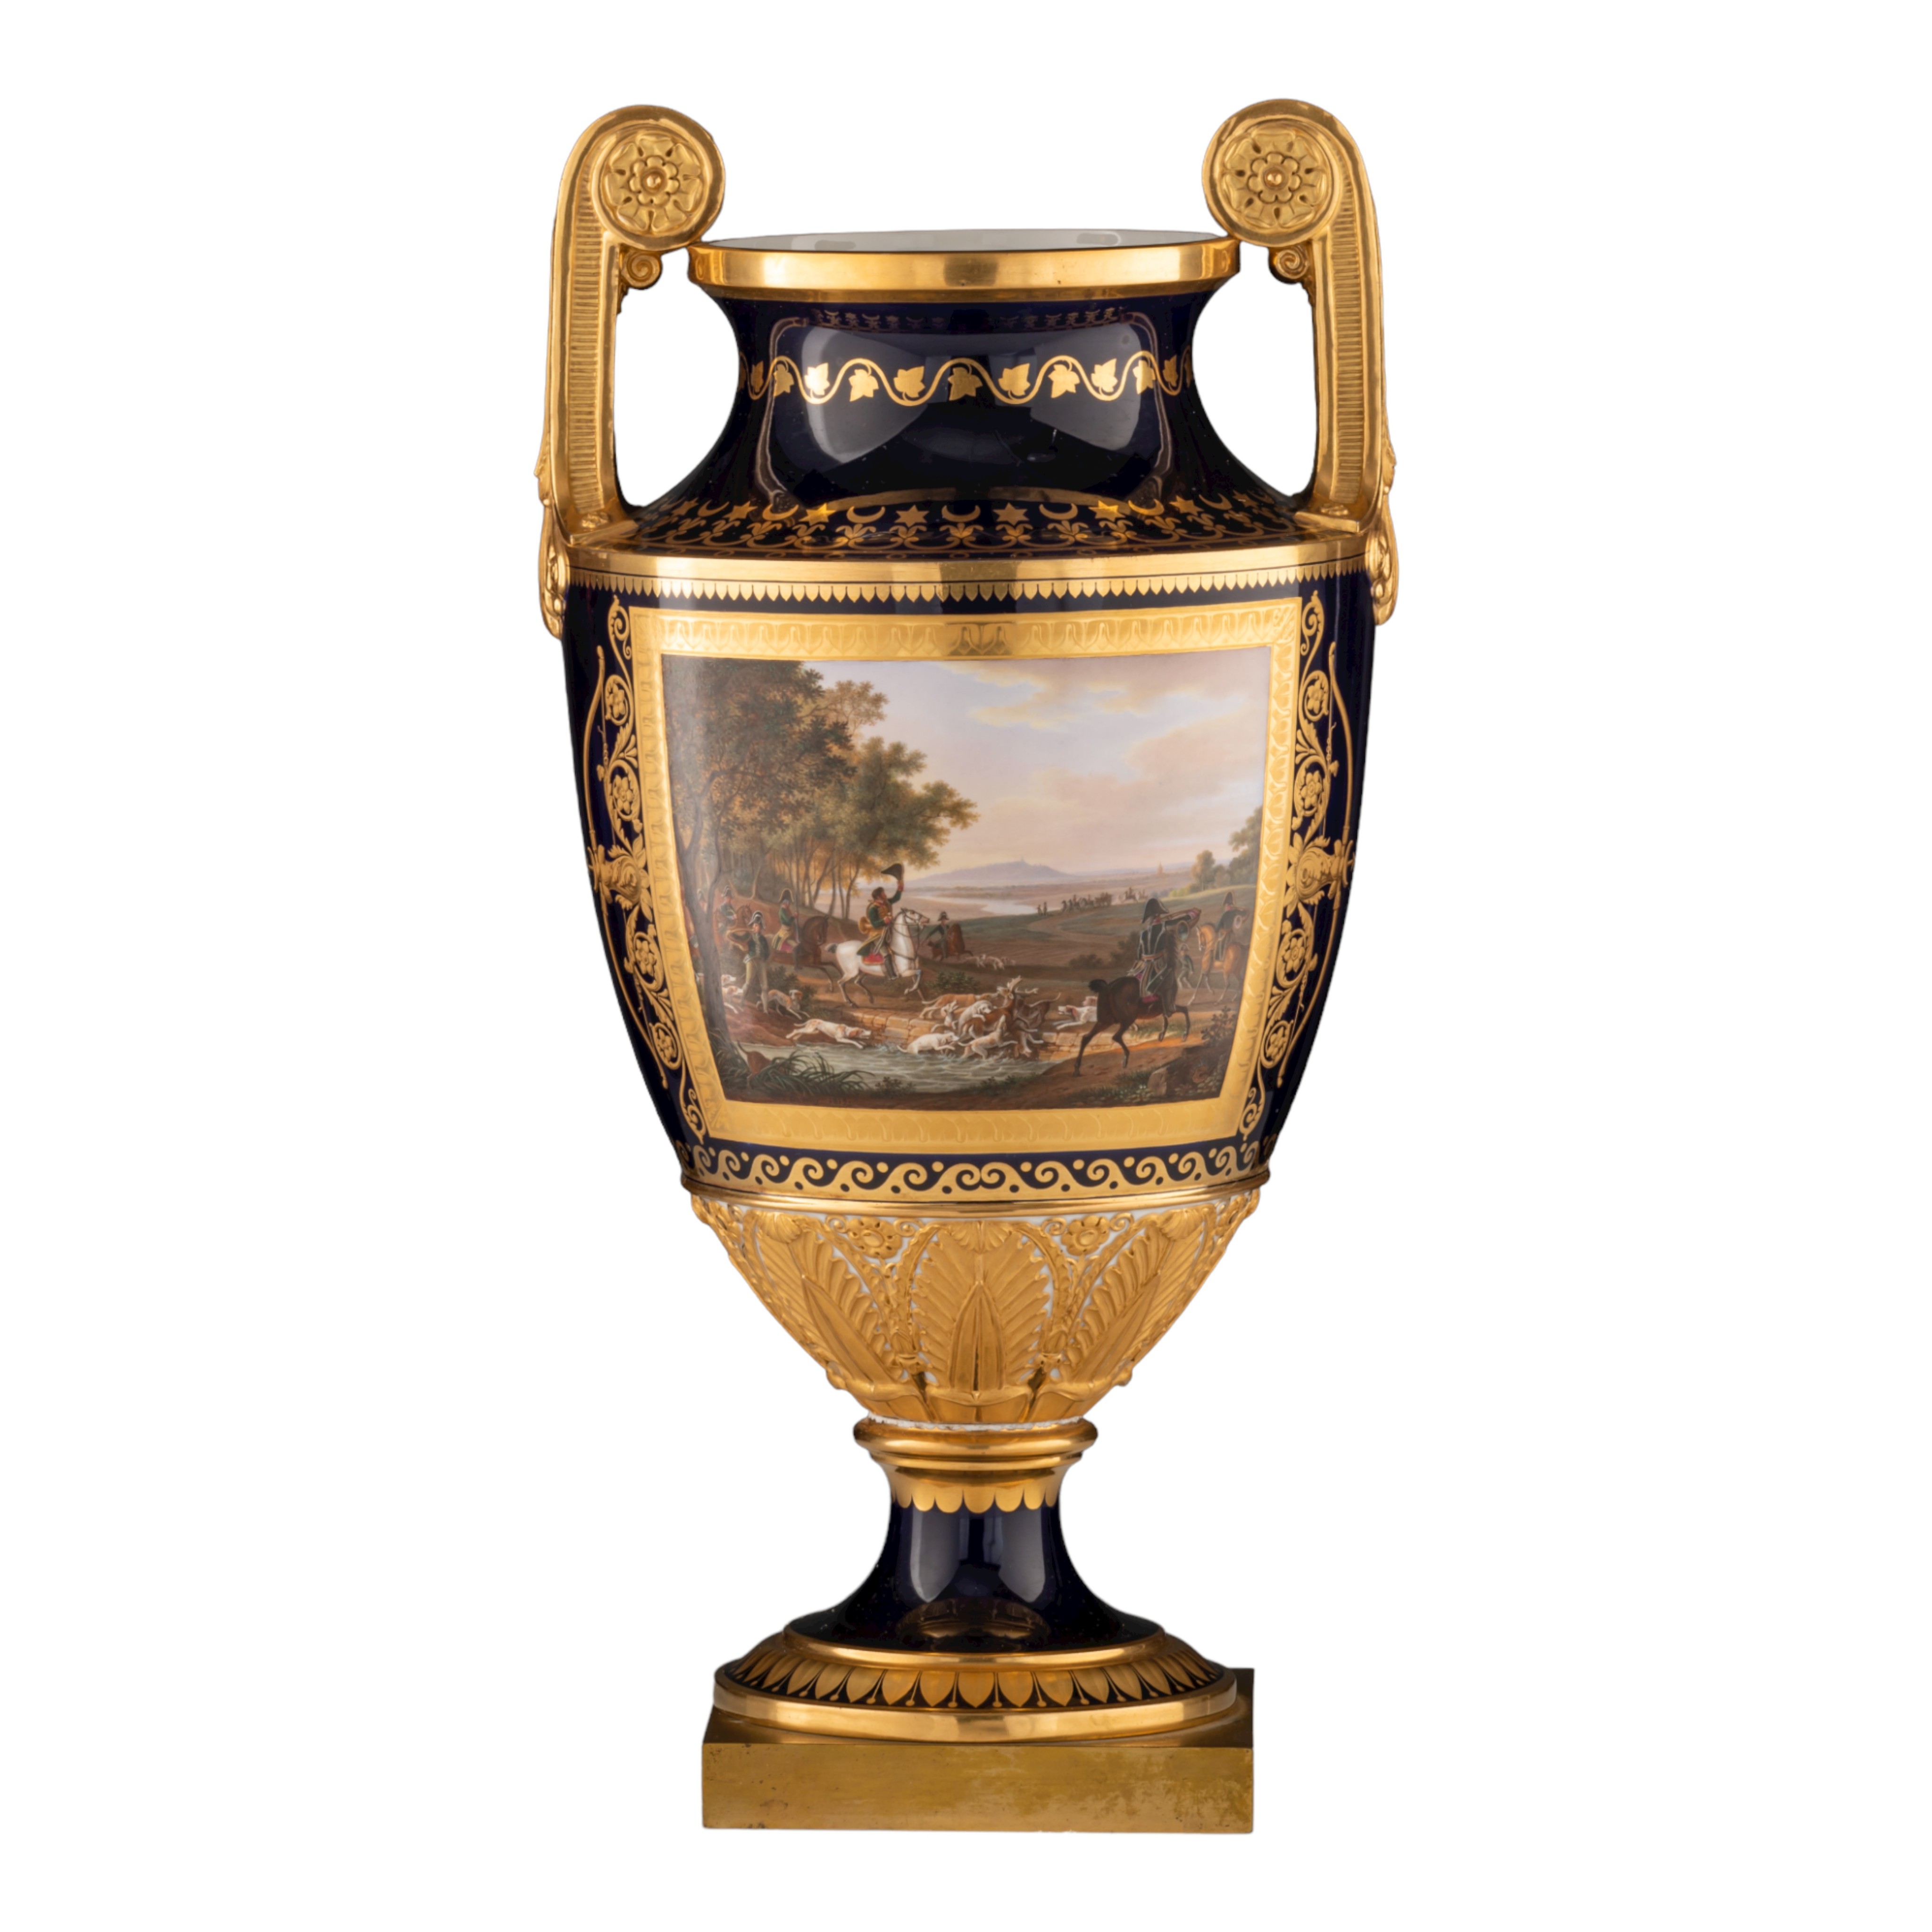 A very fine Empire Sèvres porcelain vase by Jean Charles Develly (1783-1862), 1819, H 44,5 cm